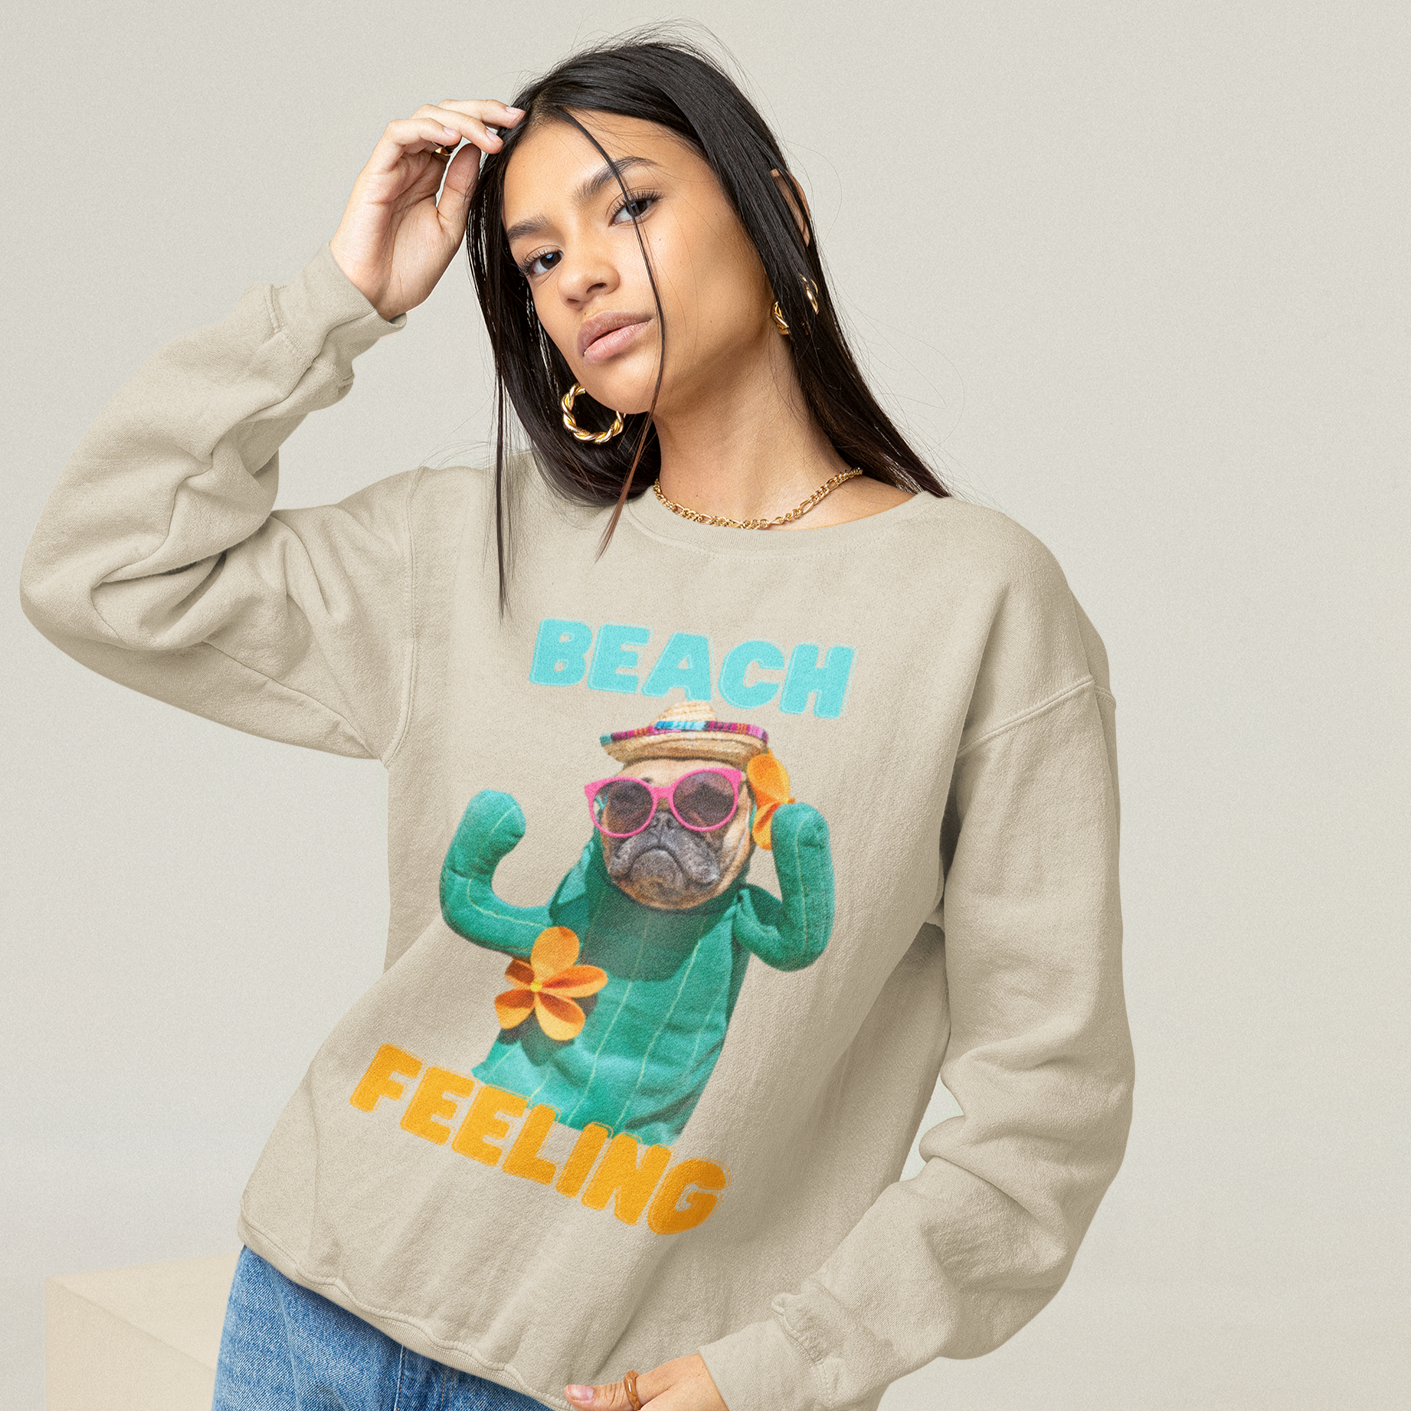 Dog "Beach Feeling" - Sweatshirt Unisex